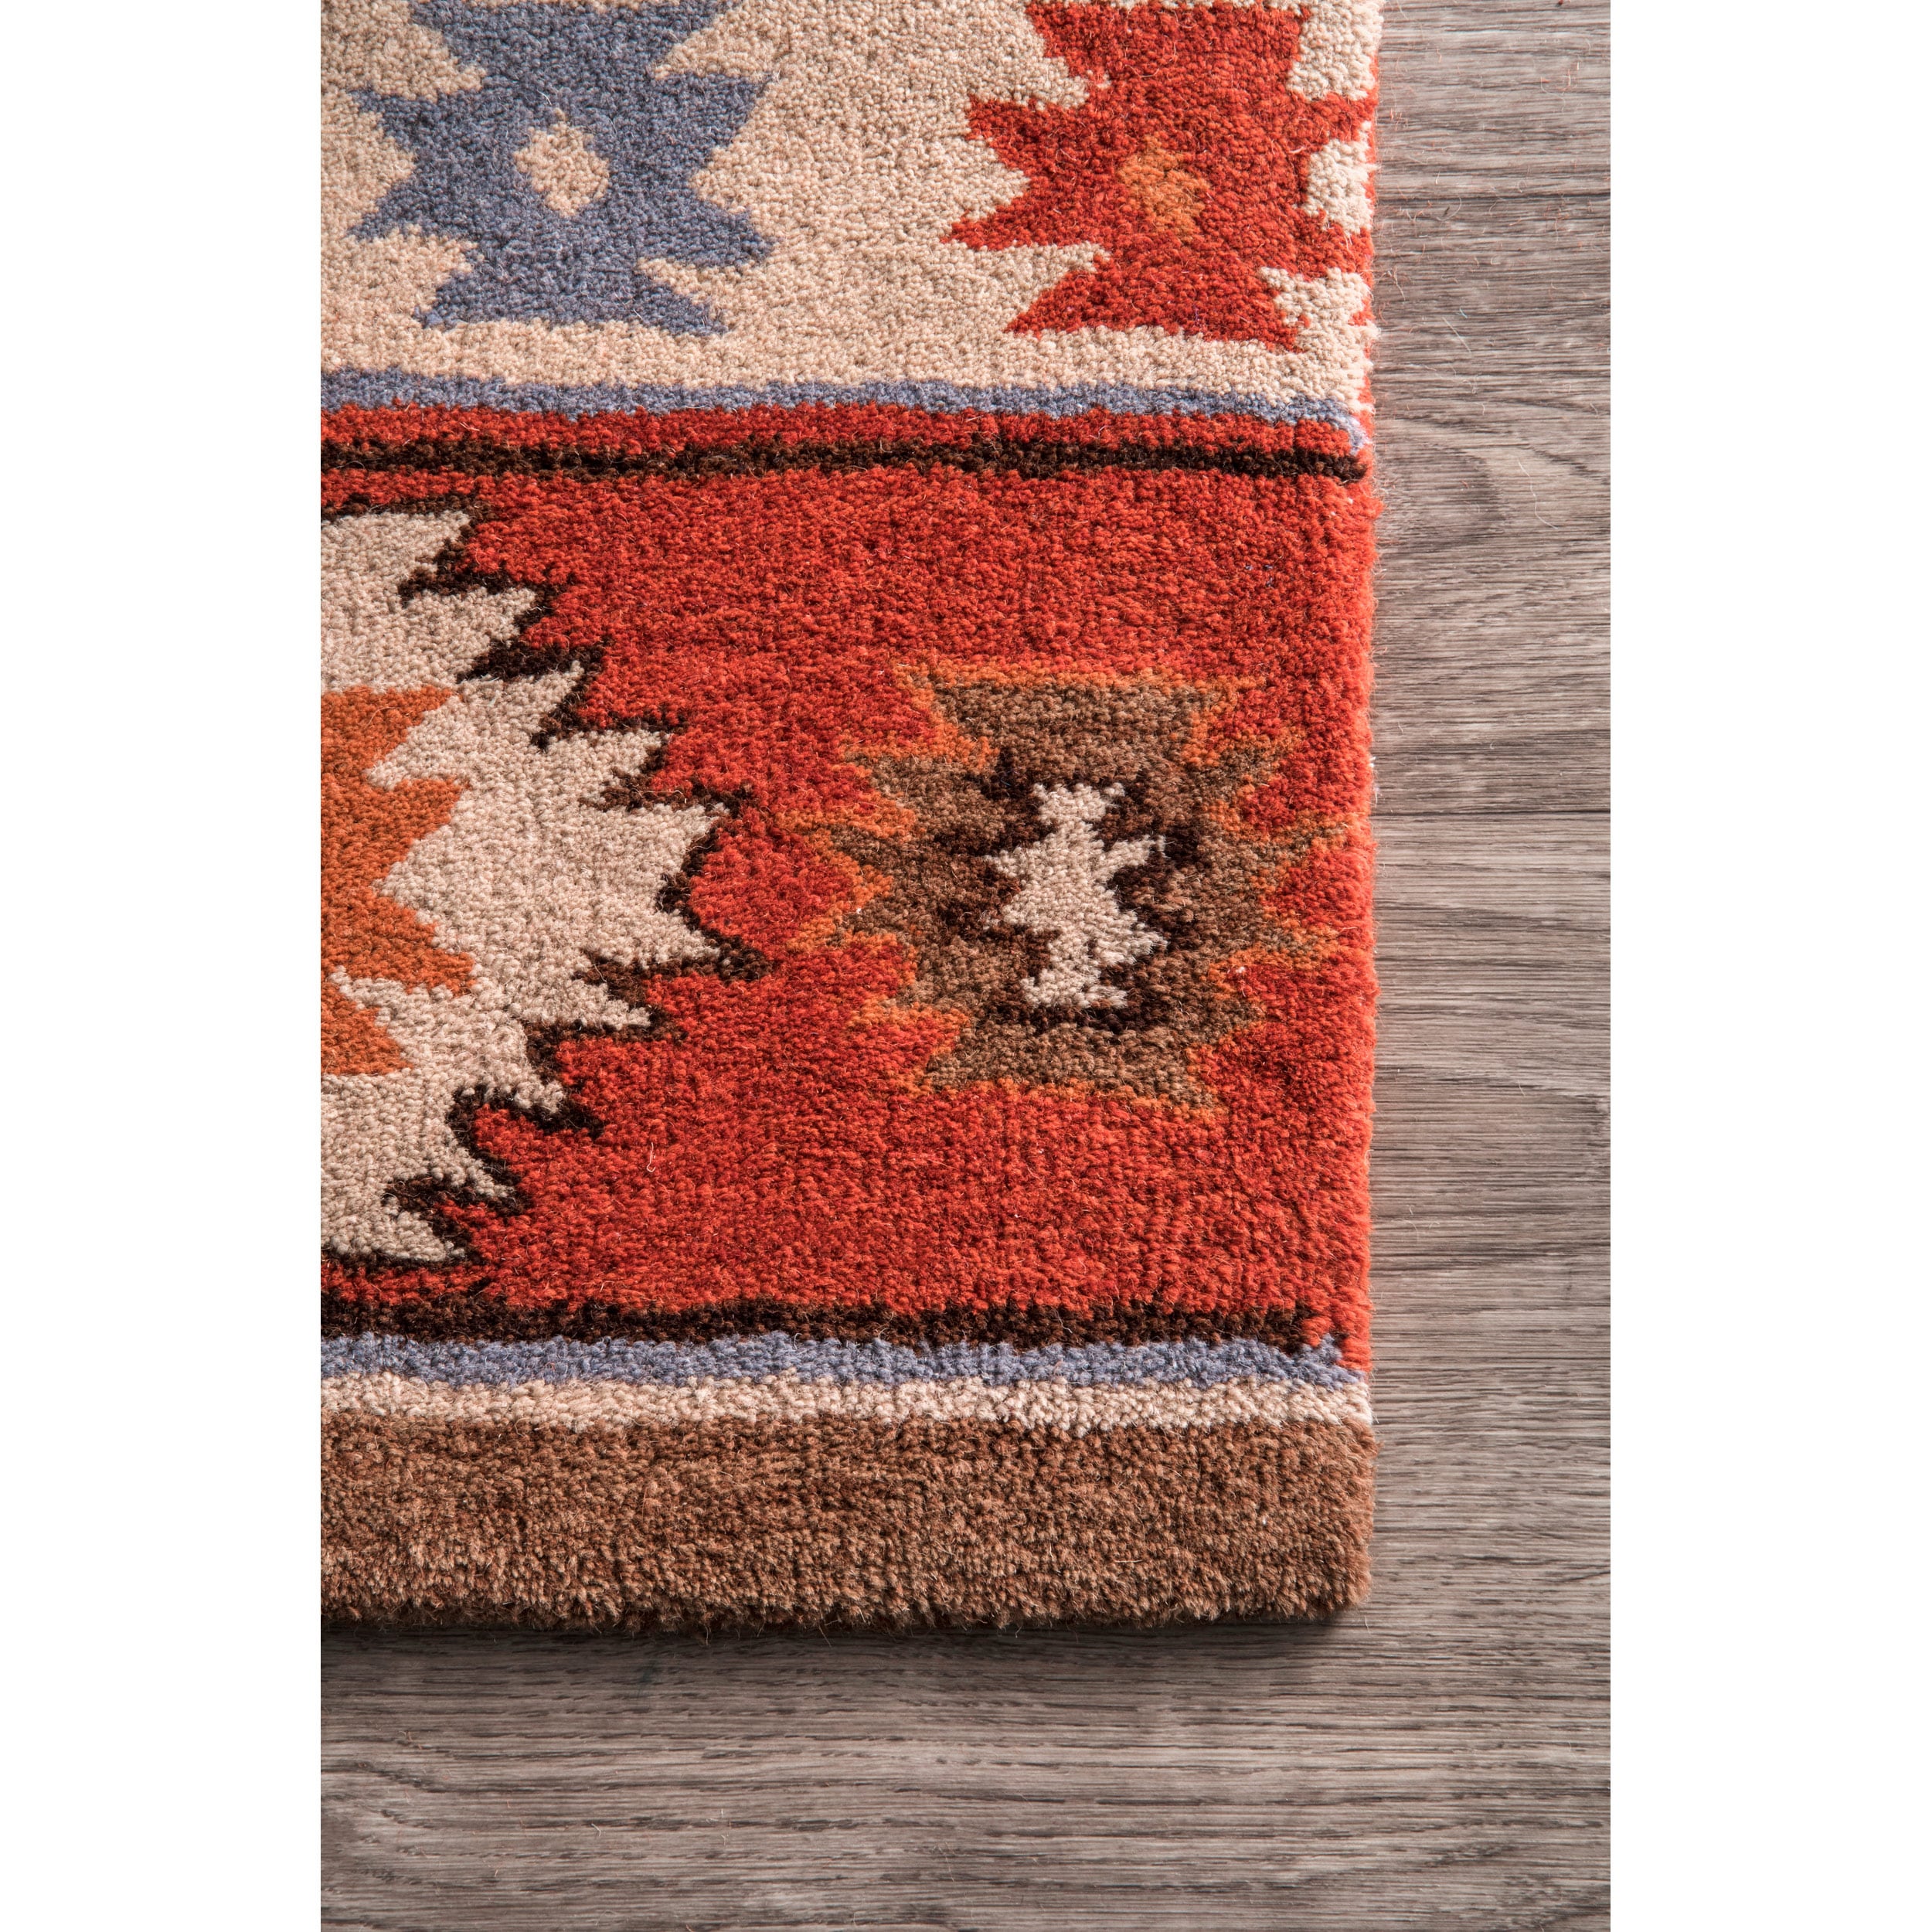 Buy Handmade Geometric Runner Rug 2x6 Traditional Wool Carpet Online in  India 